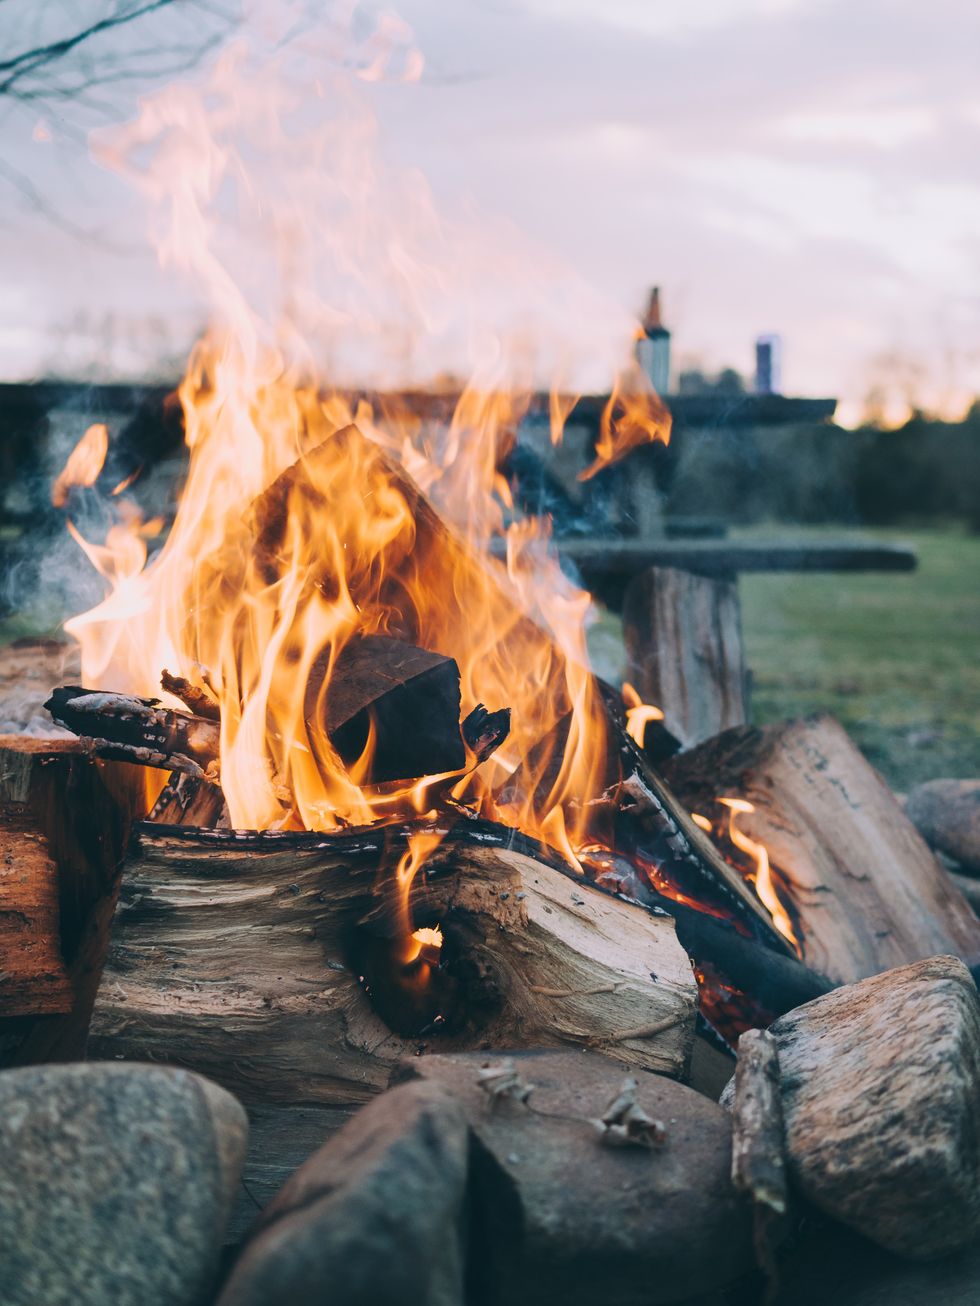 Flame, Heat, Fire, Bonfire, Ash, Campfire, Wood, 